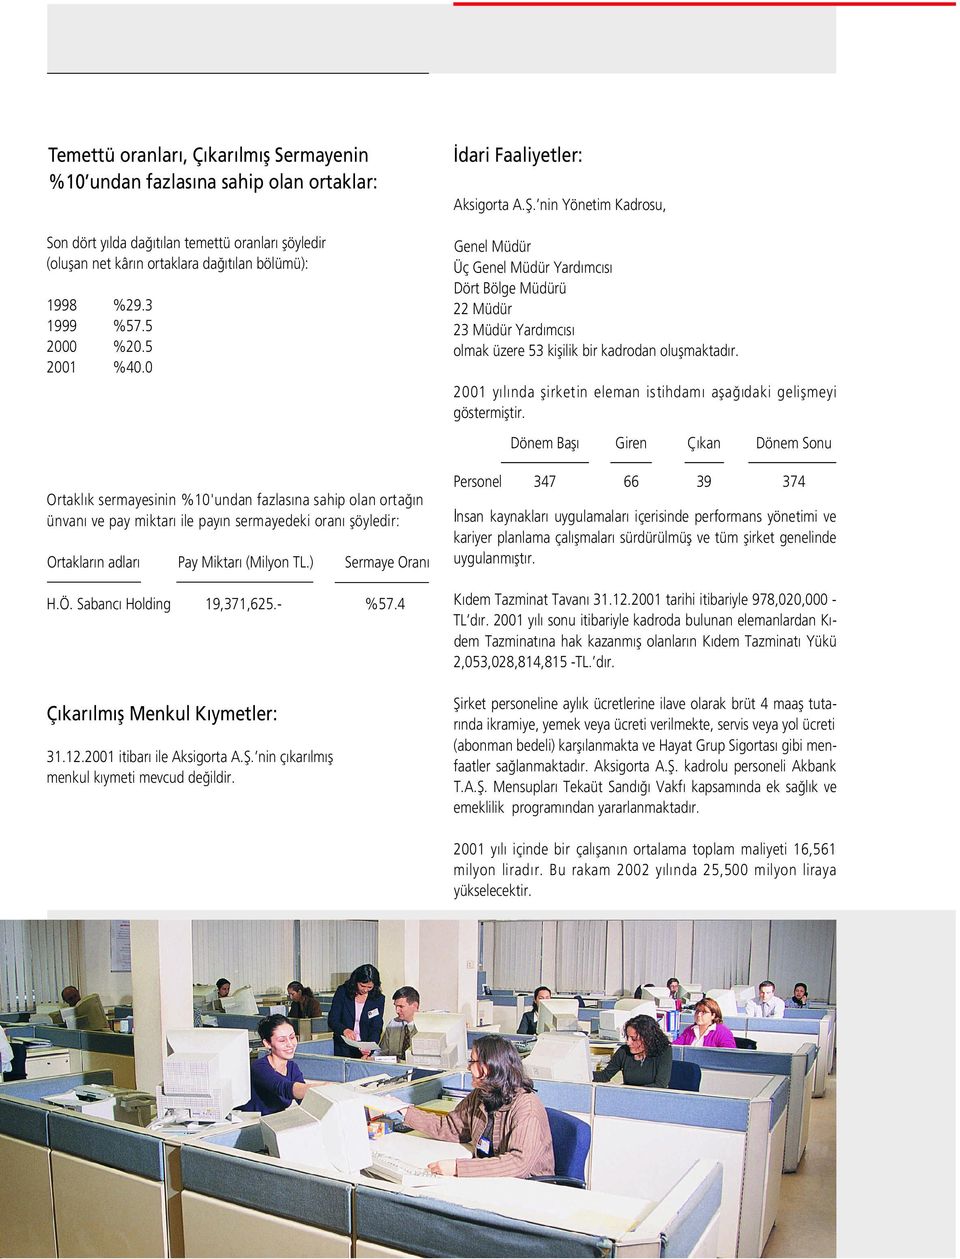 Sabanc Holding 19,371,625.- %57.4 Ç kar lm fl Menkul K ymetler: 31.12.2001 itibar ile Aksigorta A.fi.